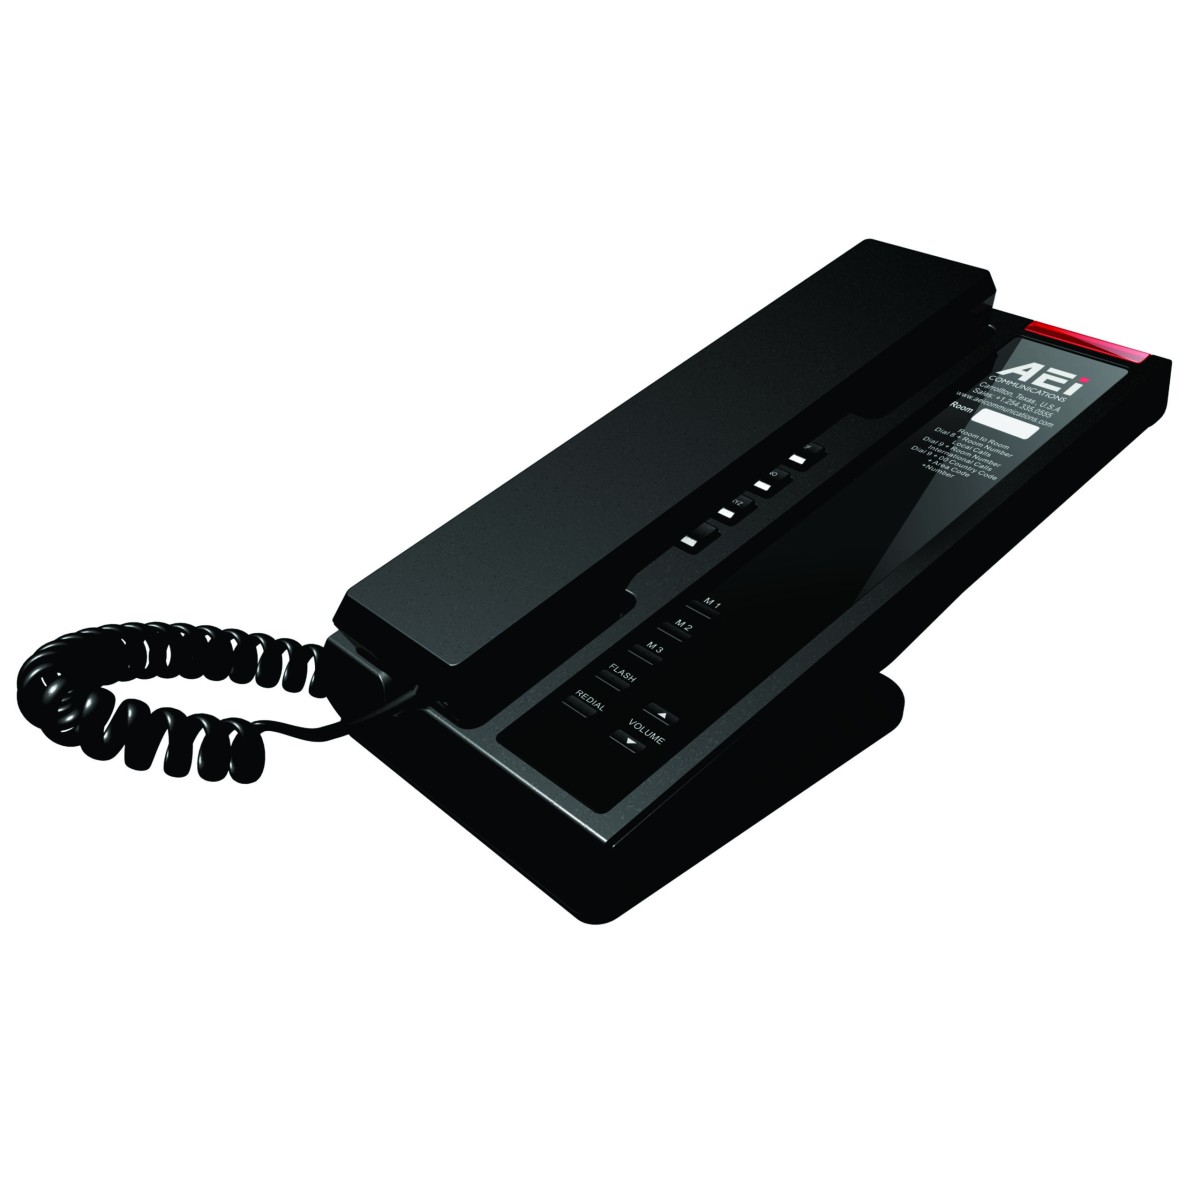 AEI ALN-5103 Slim Single-Line Analog Corded Telephone